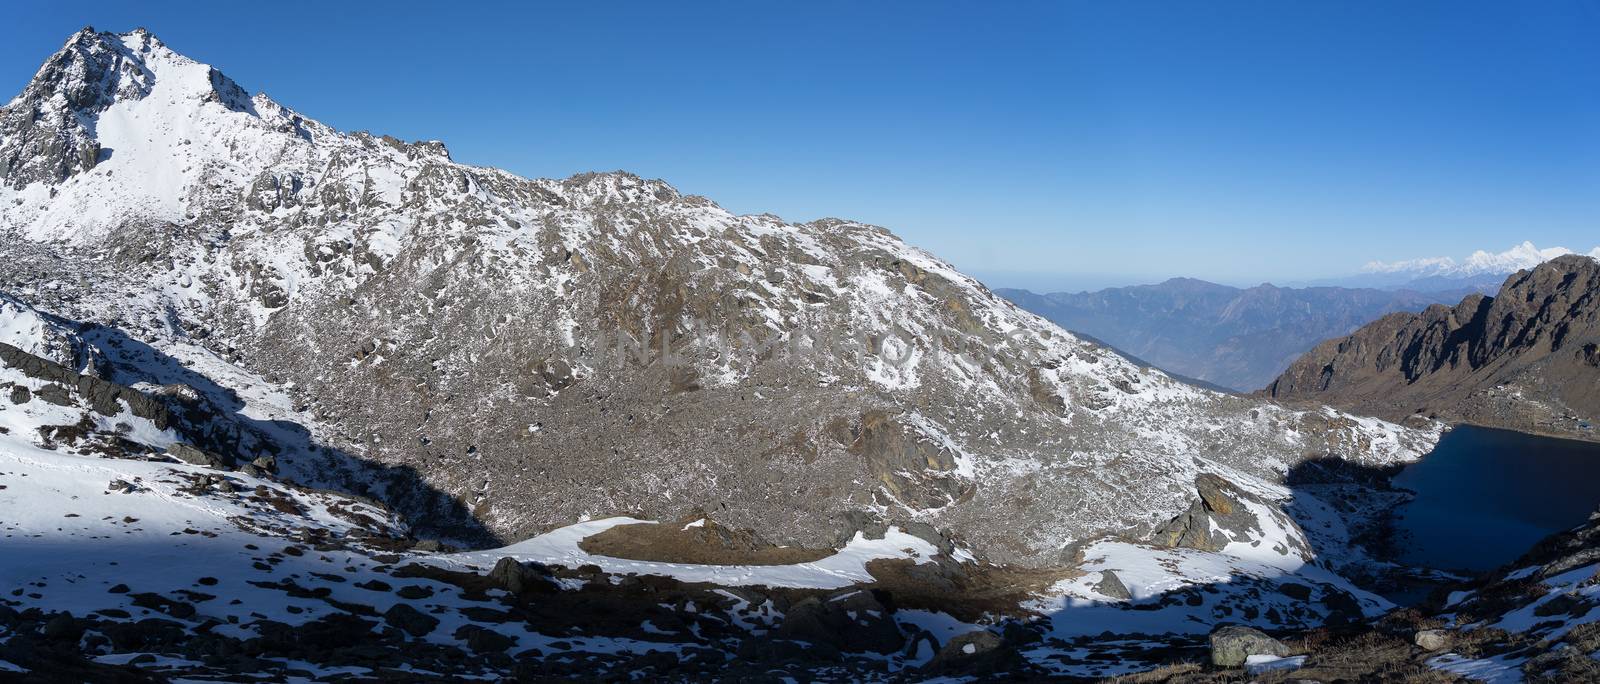 Mountain Himalata Summit in Nepal by javax